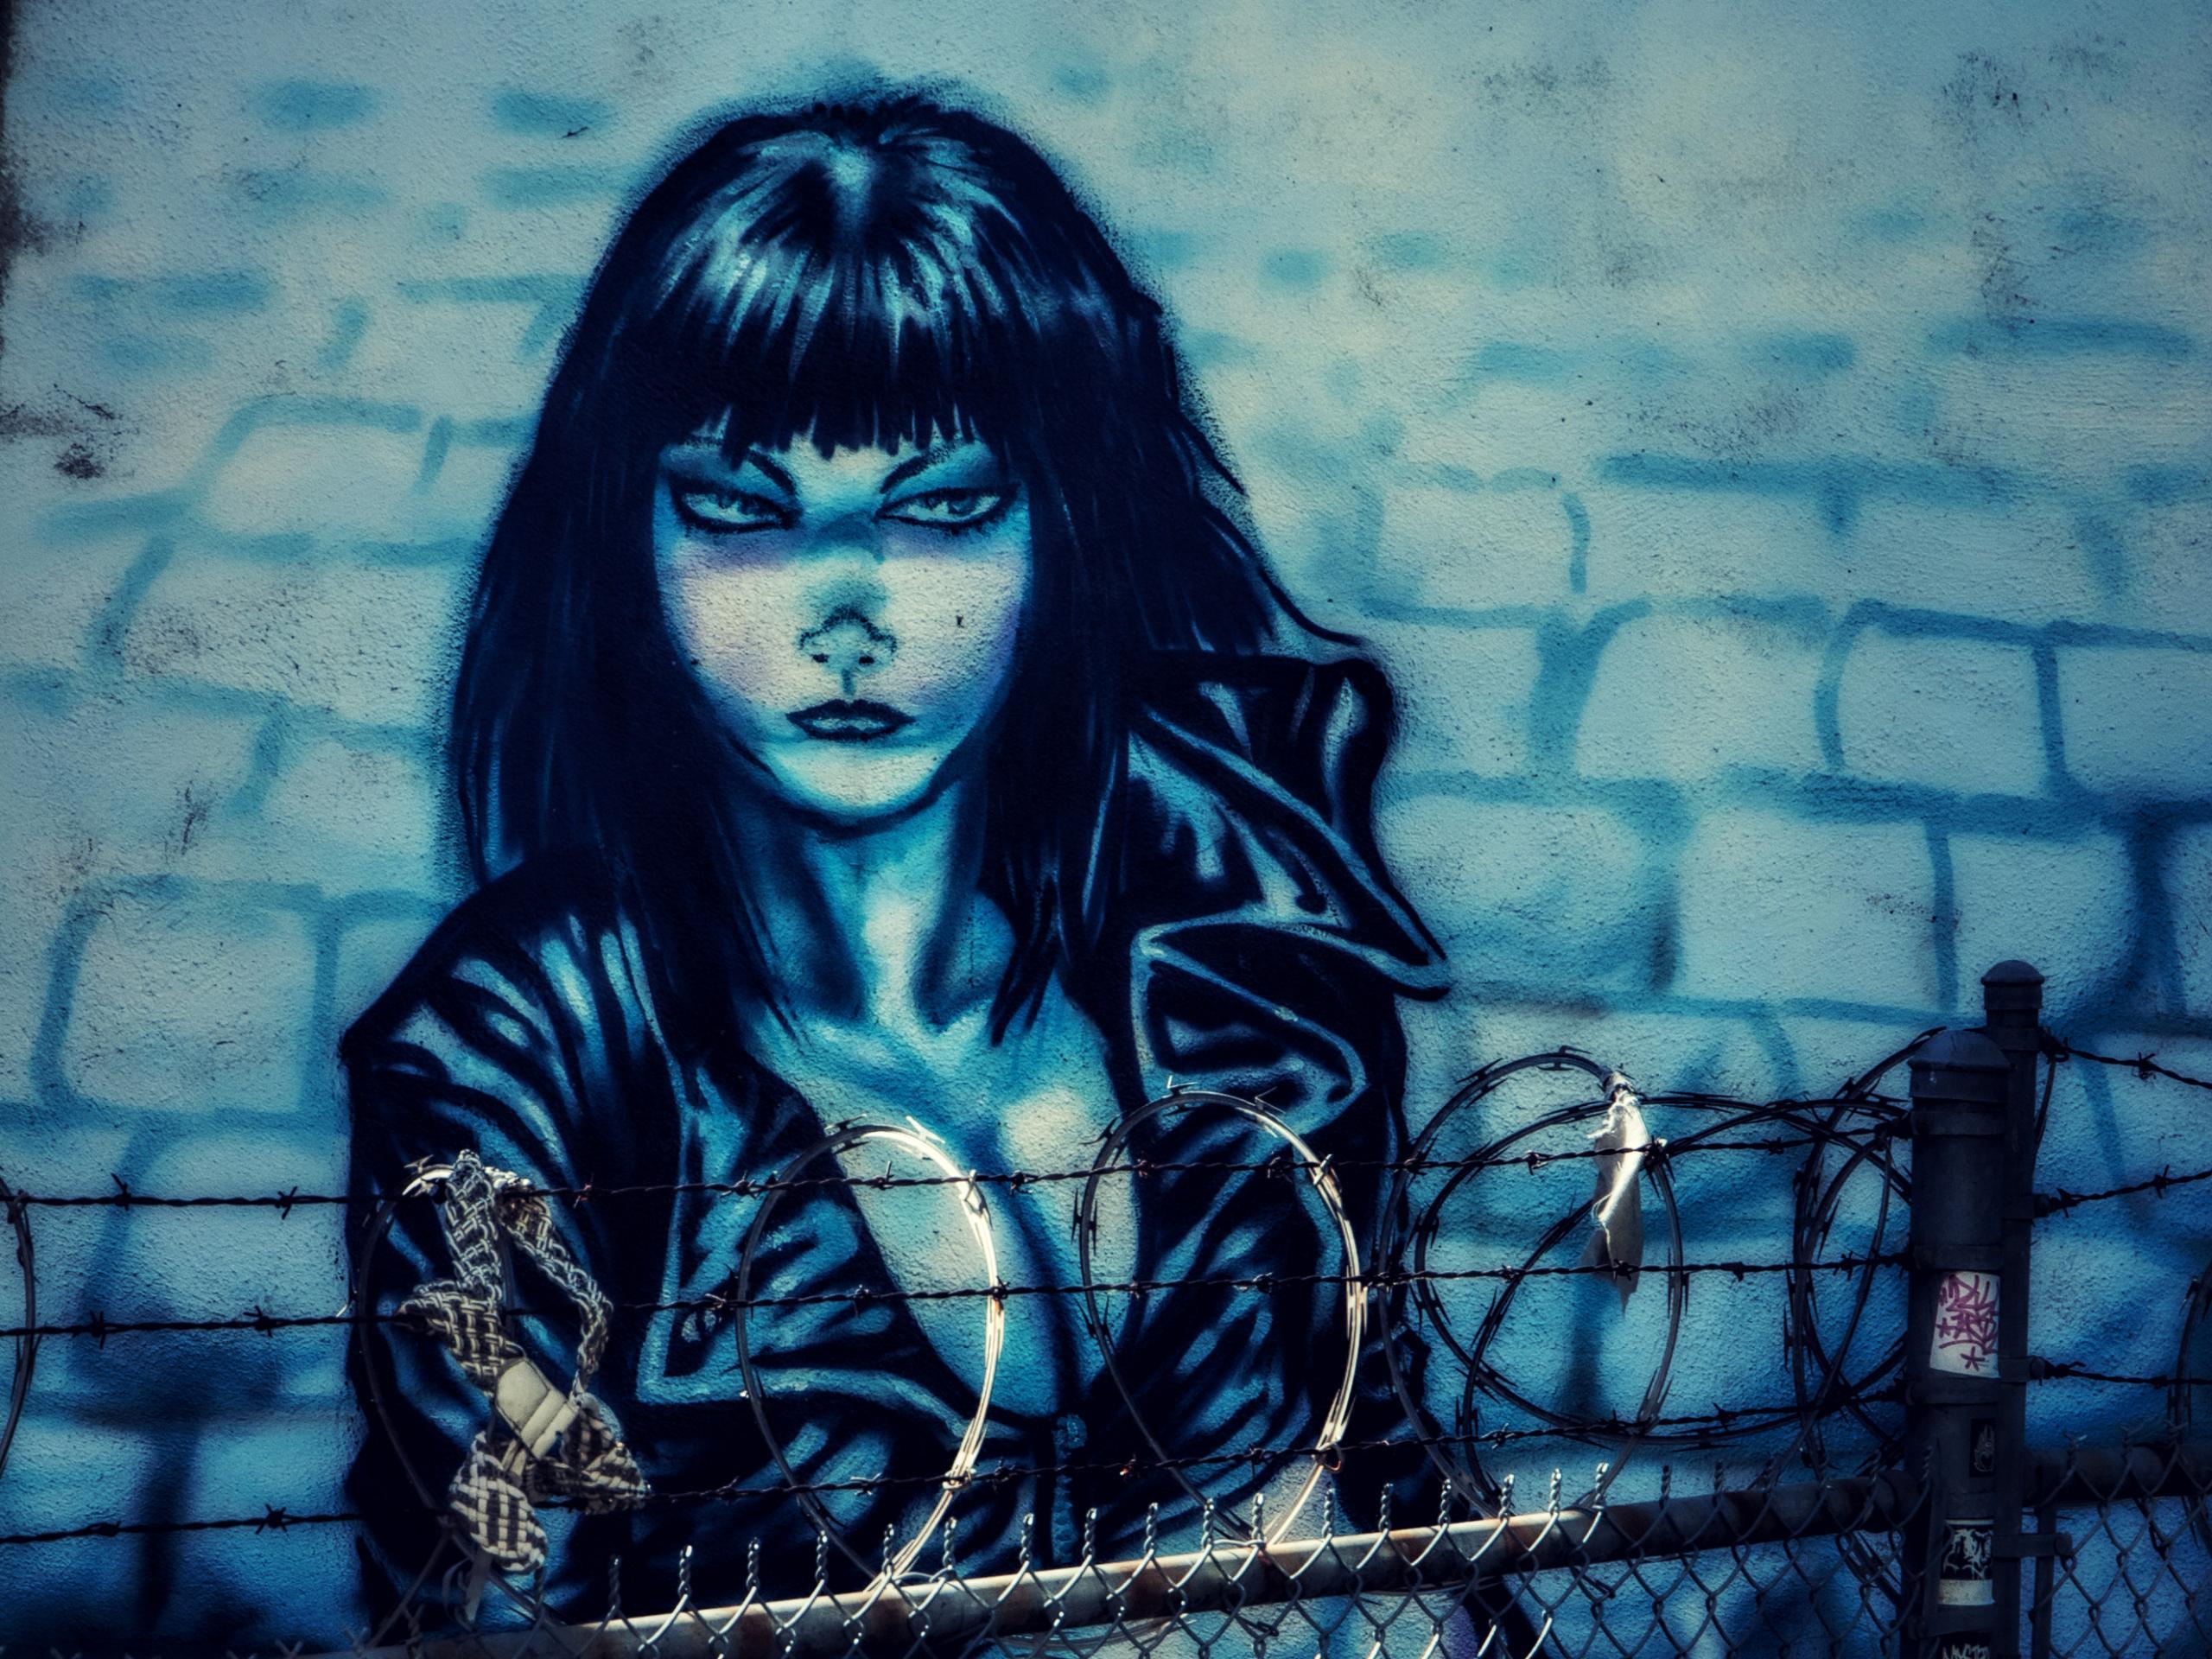 Street Art, Bad Girl Portrait, Metal Fence widescreen wallpaper